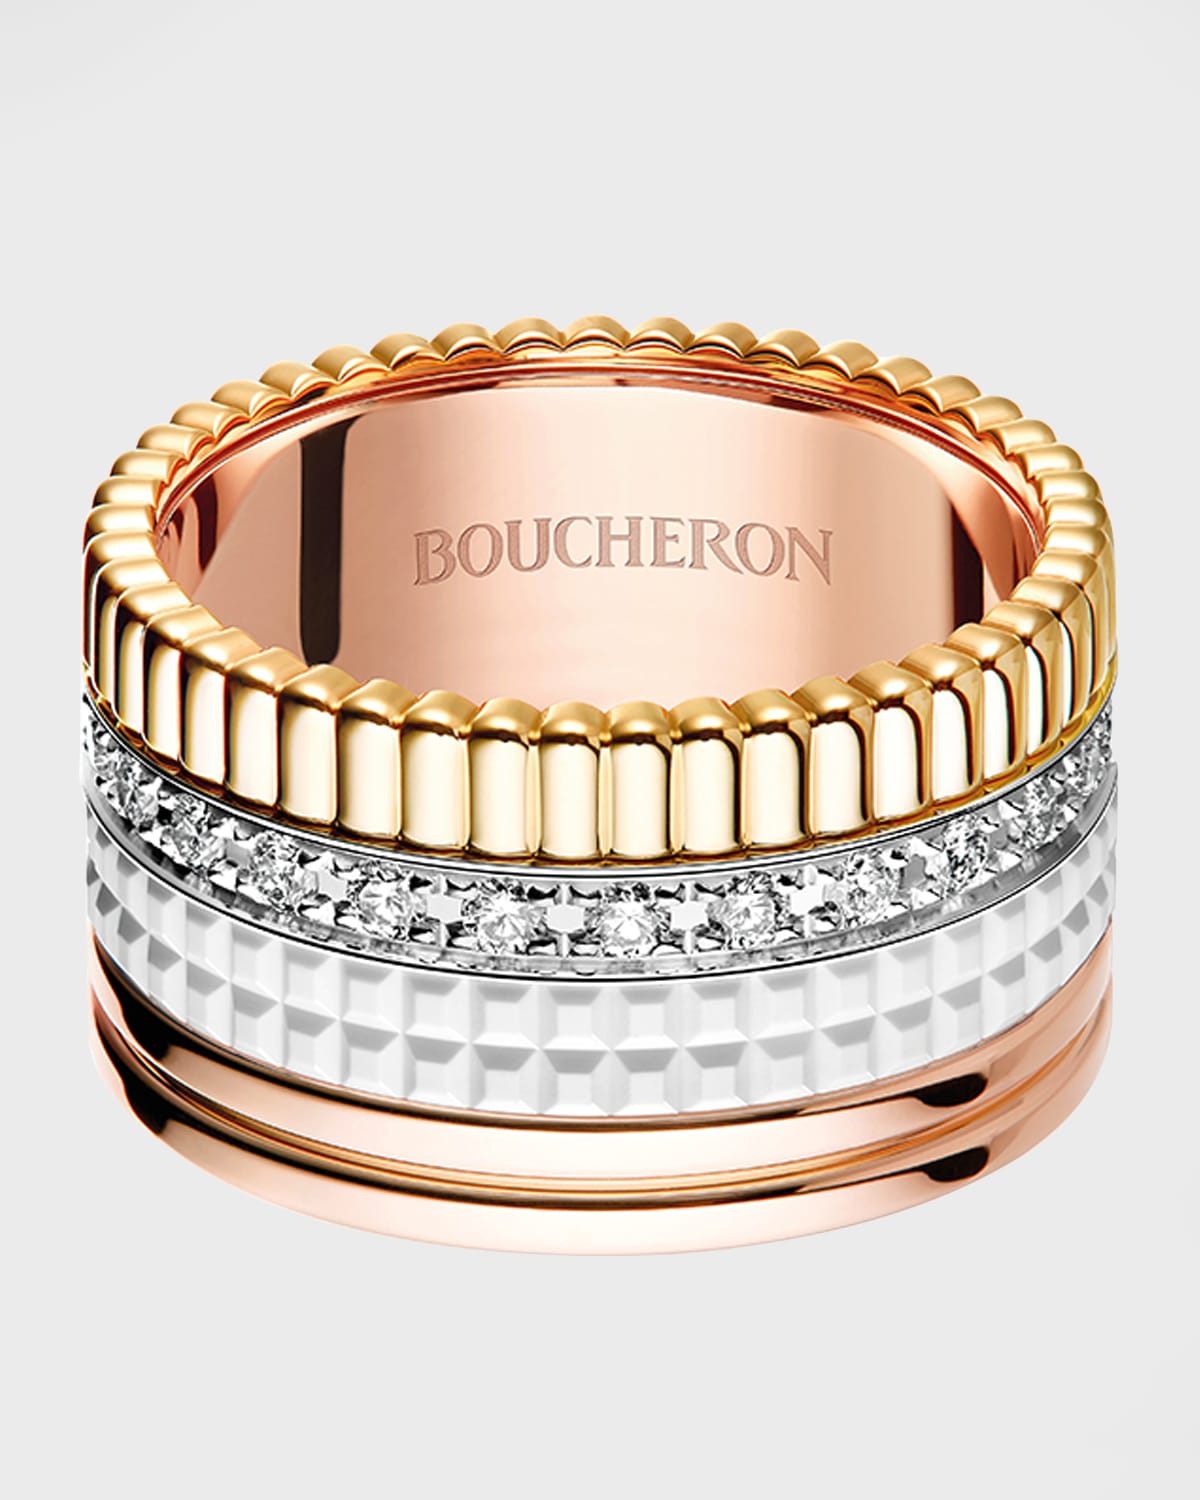 Boucheron Quatre Large 18K Gold & White Ceramic Ring with Diamonds, Size 53